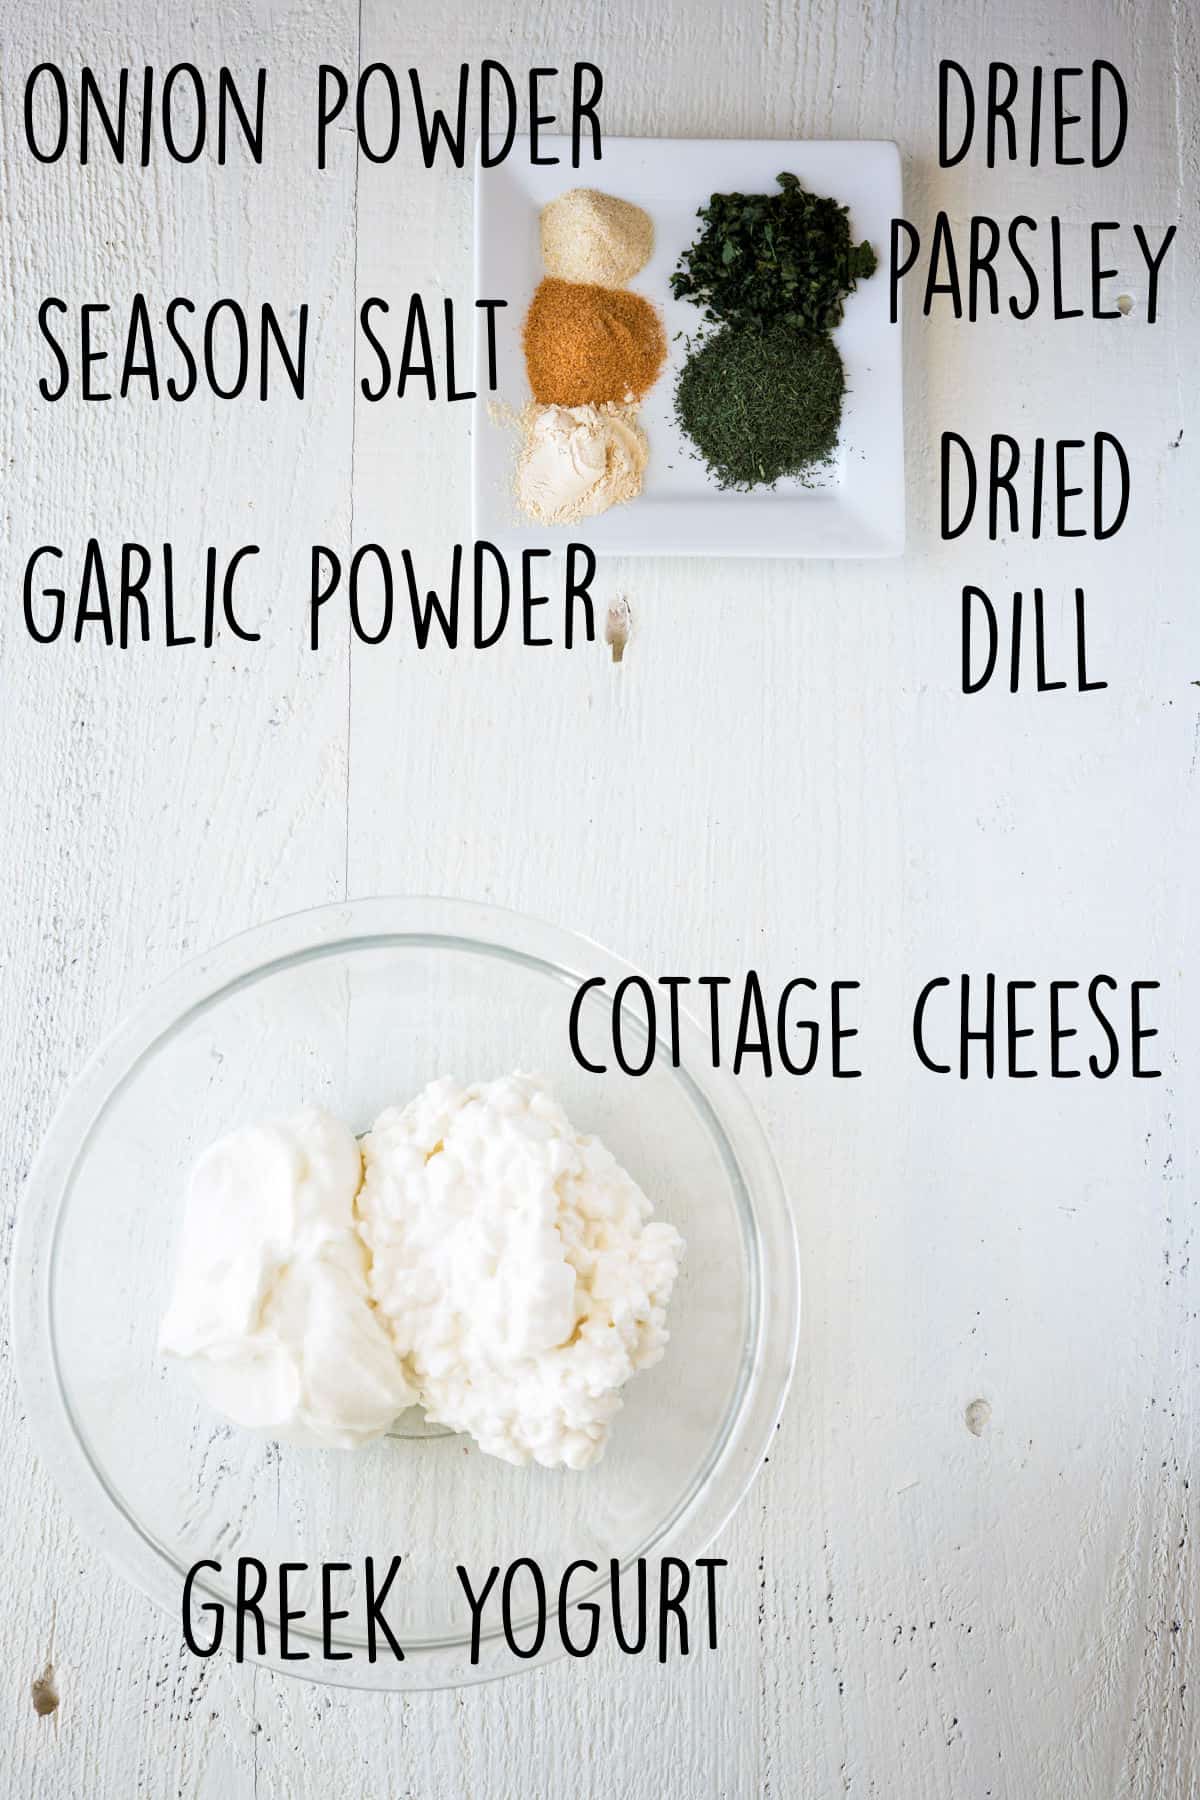 Season salt, garlic powder, onion powder, cottage cheese, Greek yogurt, parsley, and dill to make healthy veggie dip.